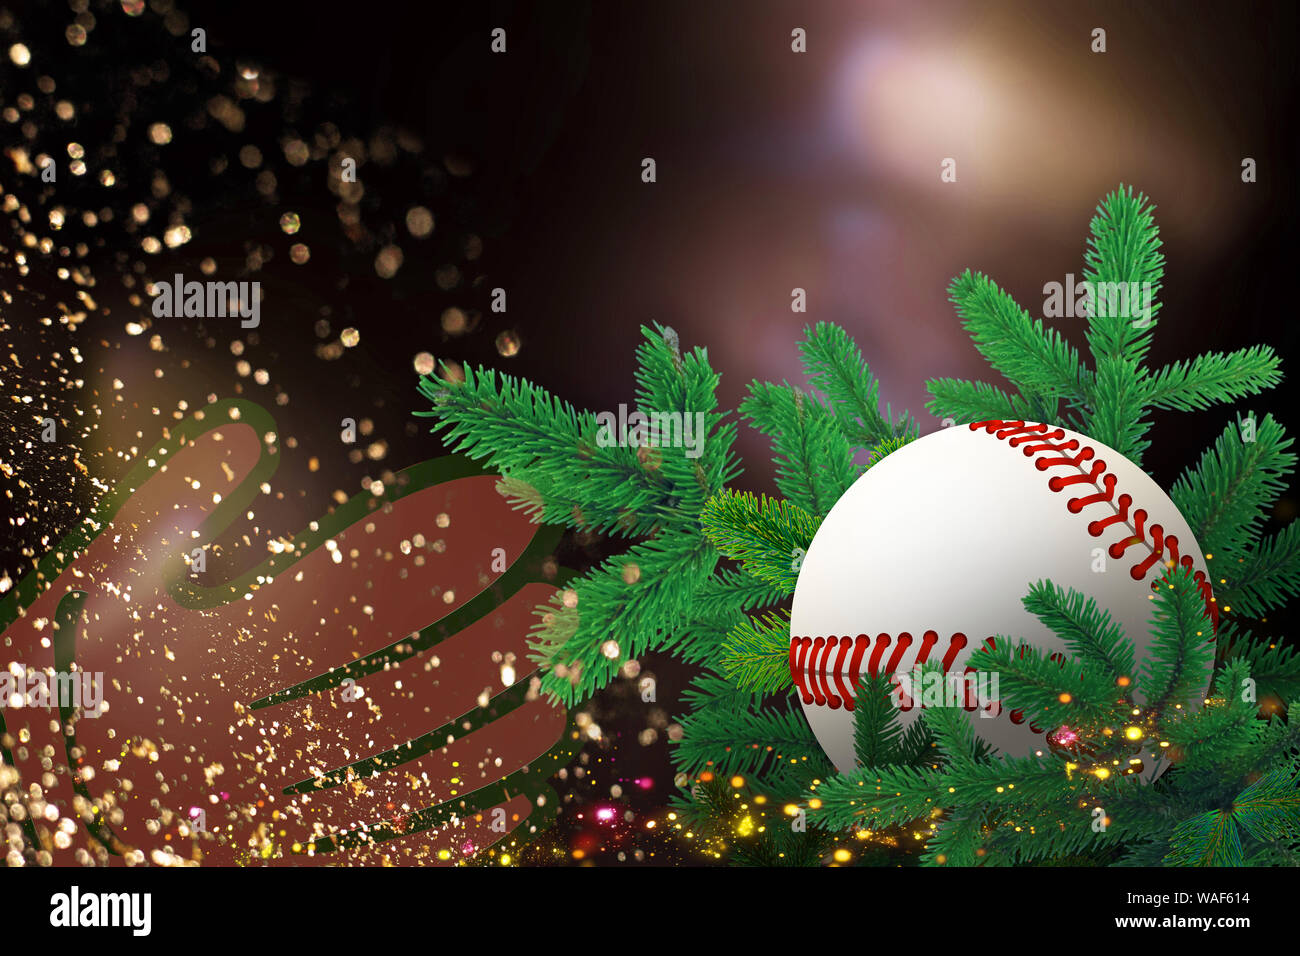 Baseball, Sports Christmas Card with festive decorations. Stock Photo